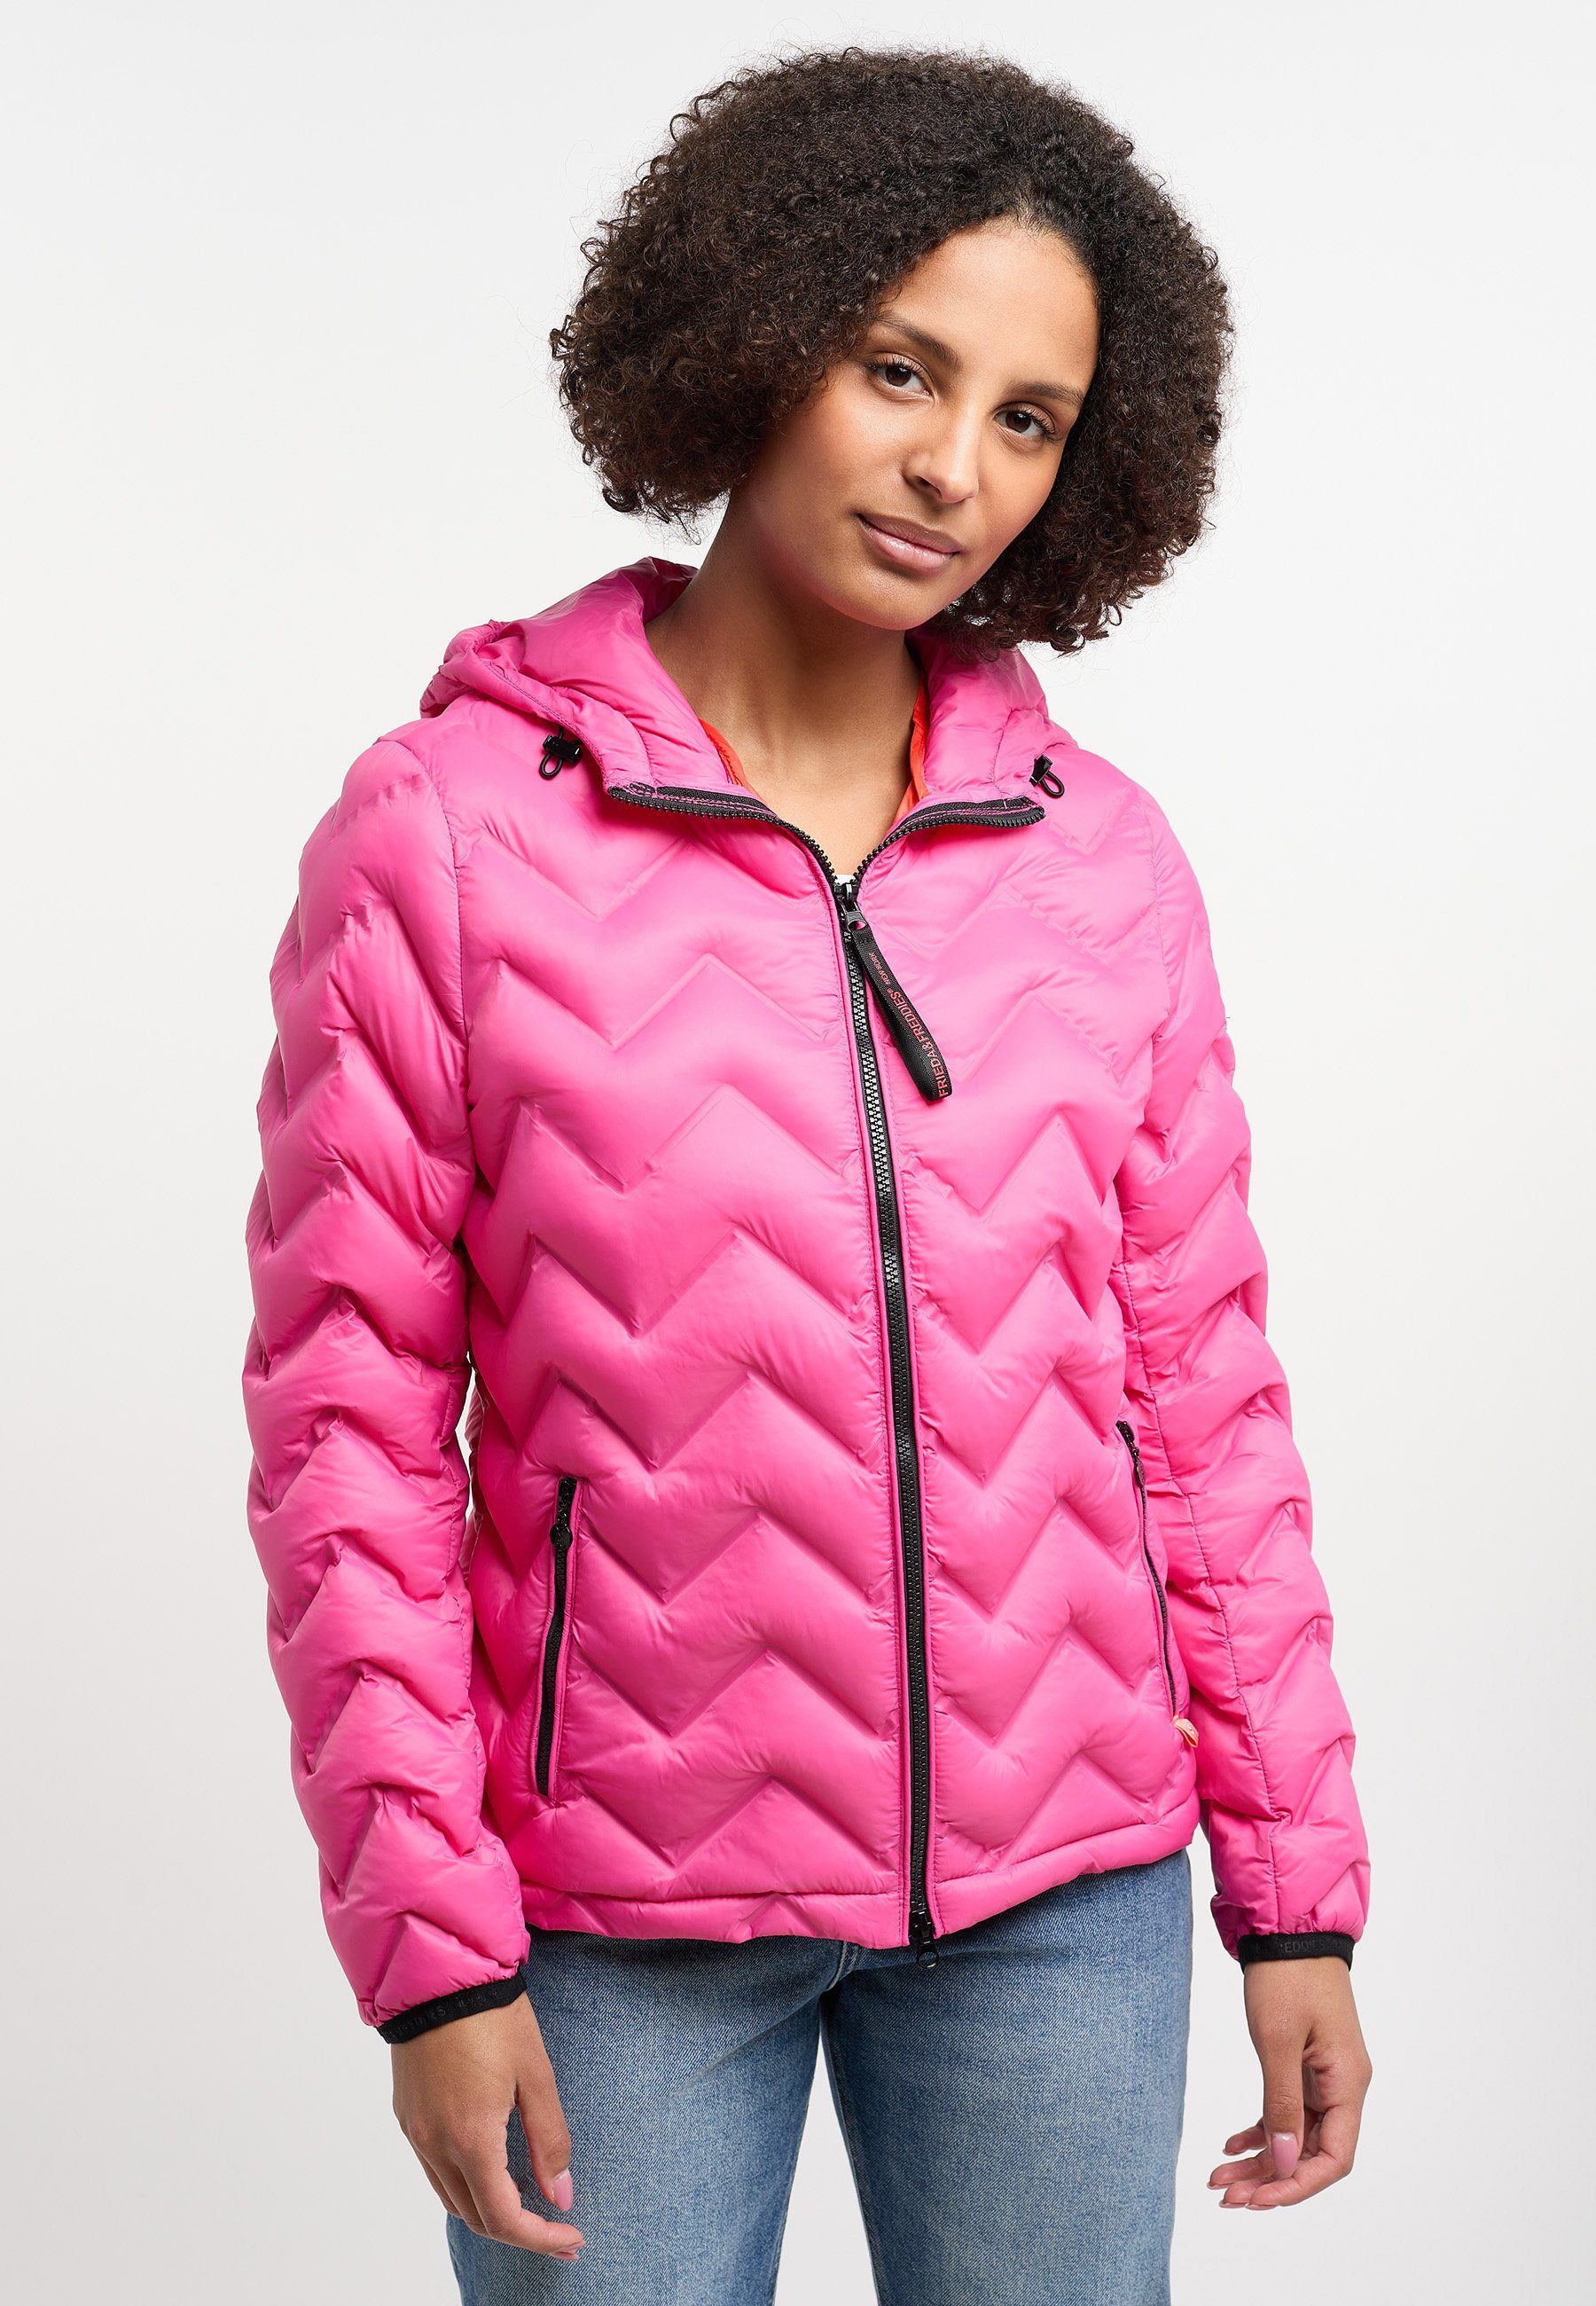 Frieda & Freddies NY Steppjacke Thermolite Jacket, Mailynn mit Reißverschluss pink